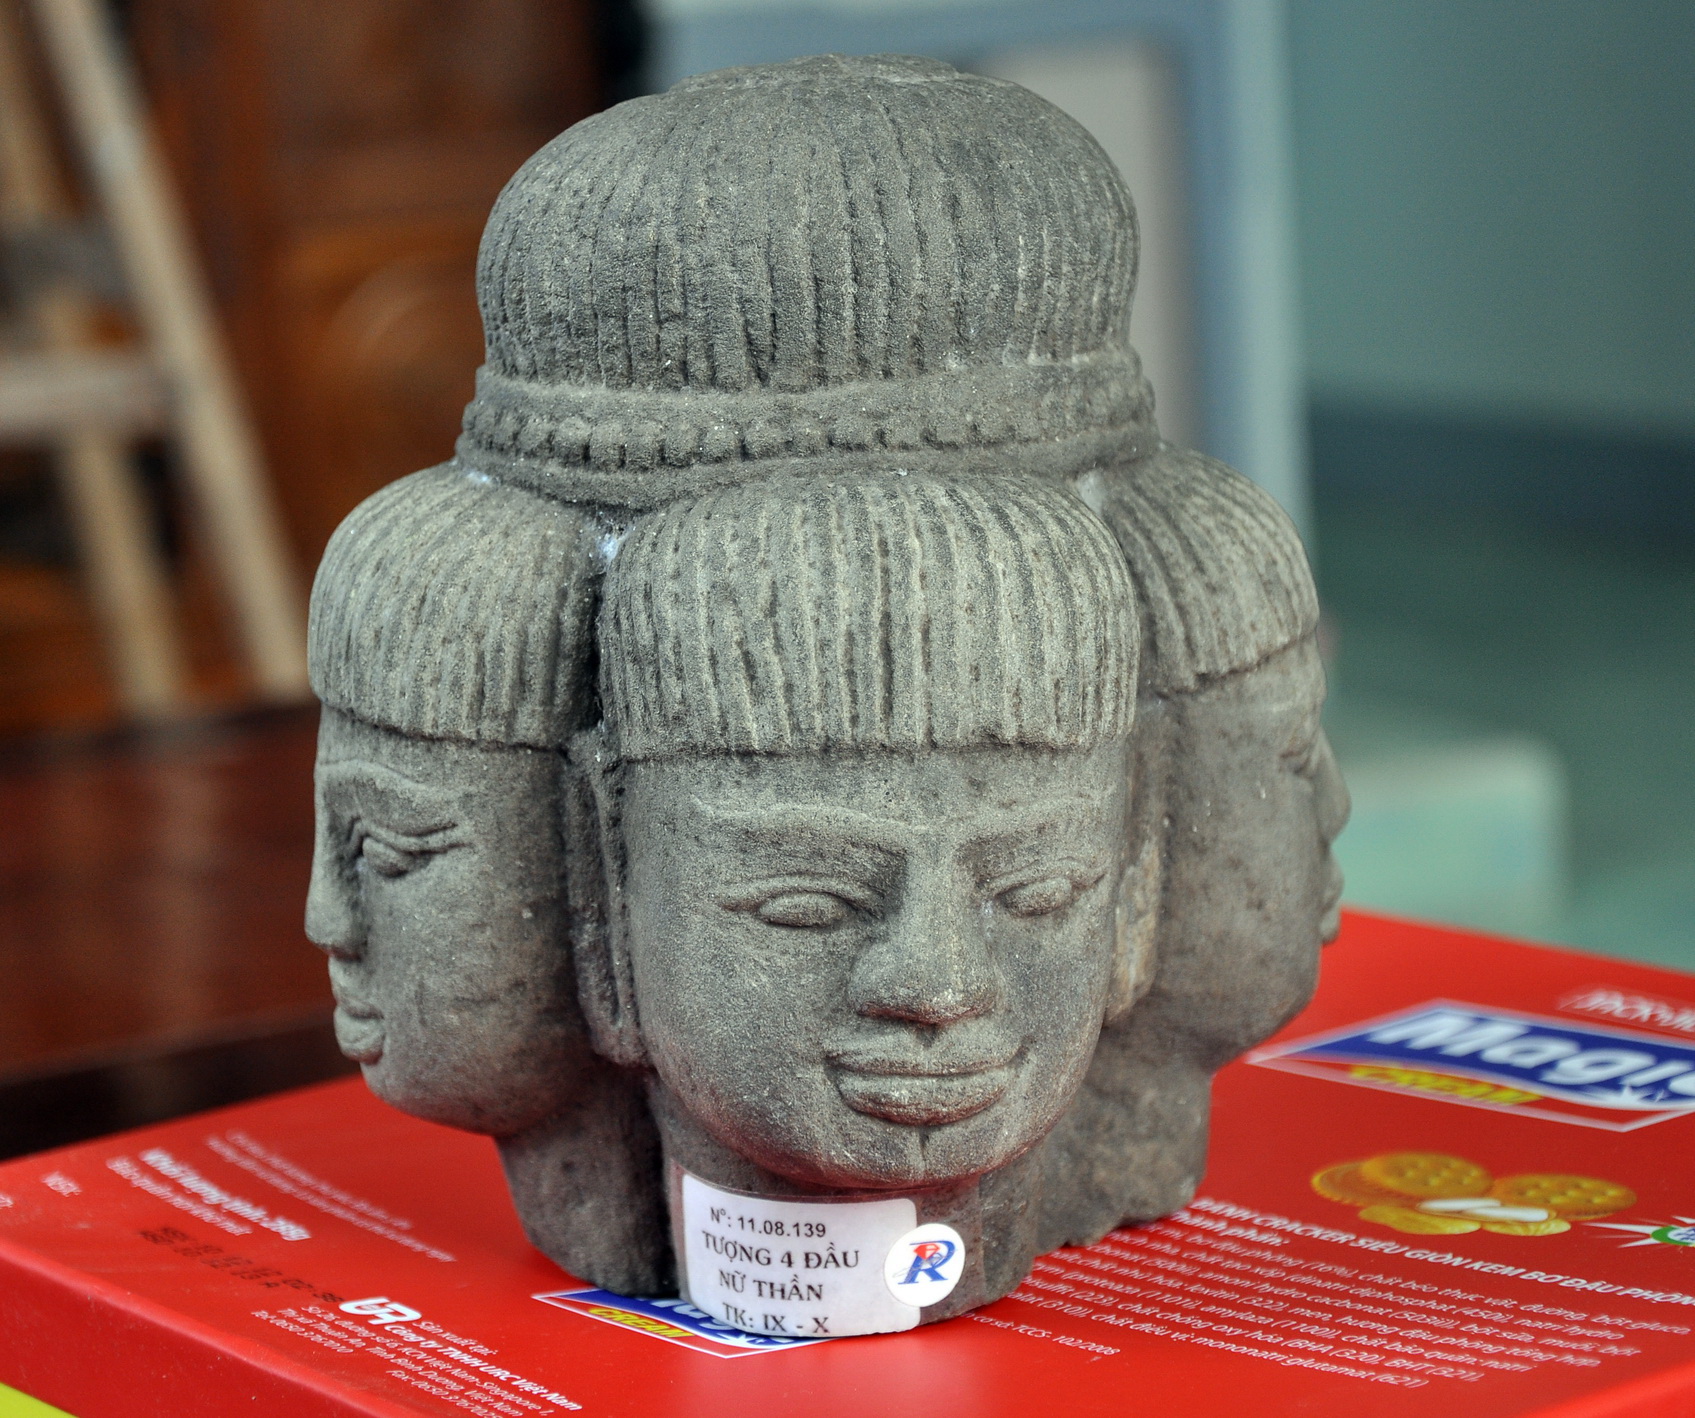 Vietnamese enthusiast to return antique to Cambodia